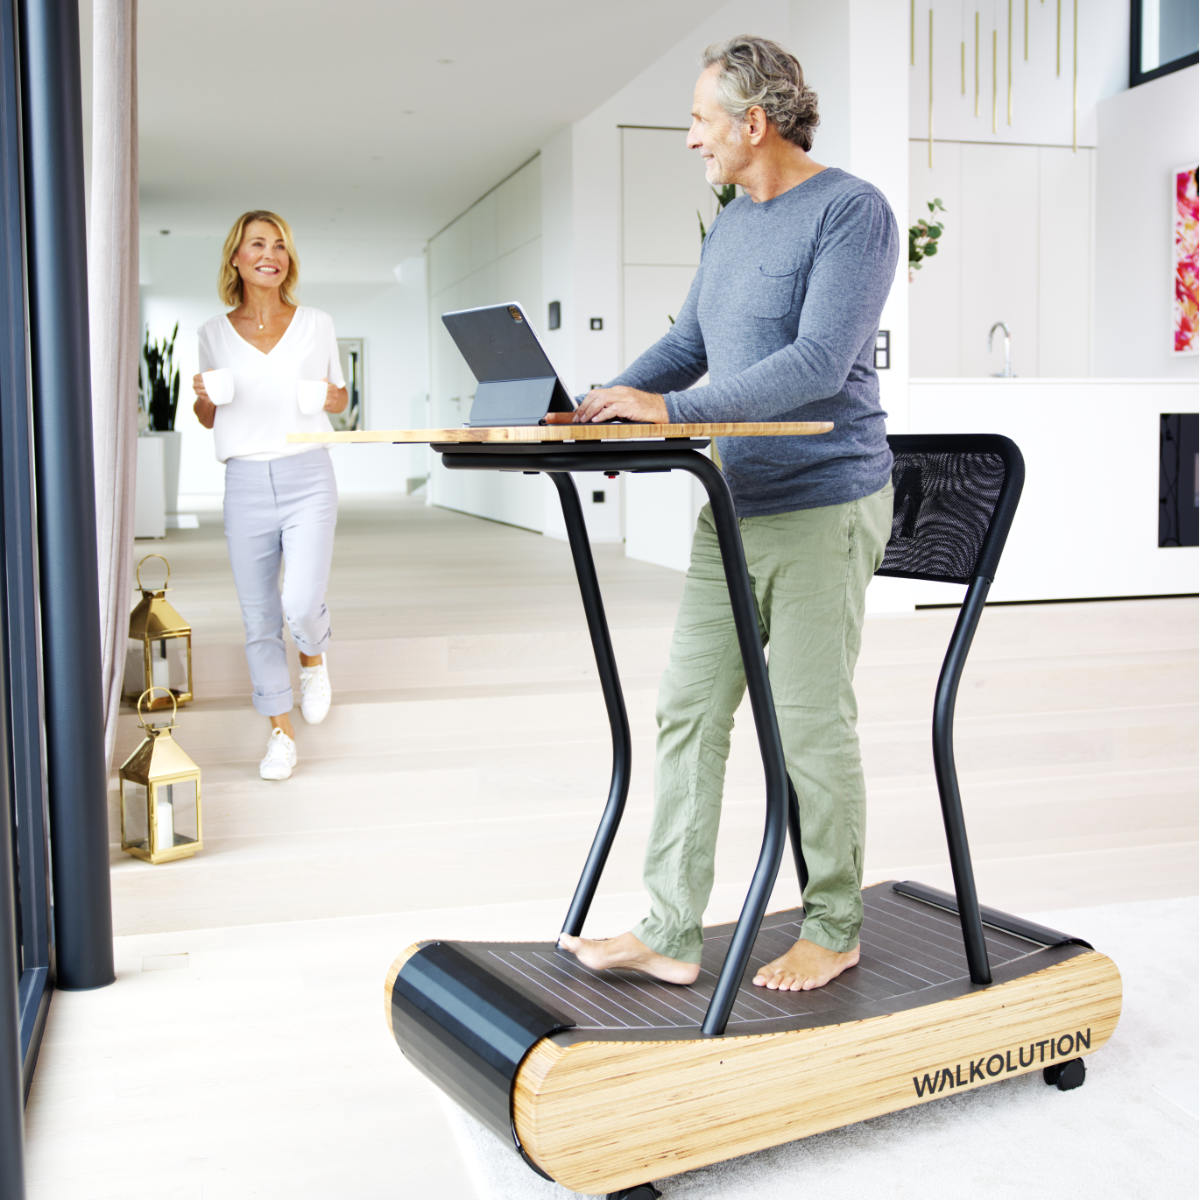 Man using treadmill desk in home office Walkolution Germany